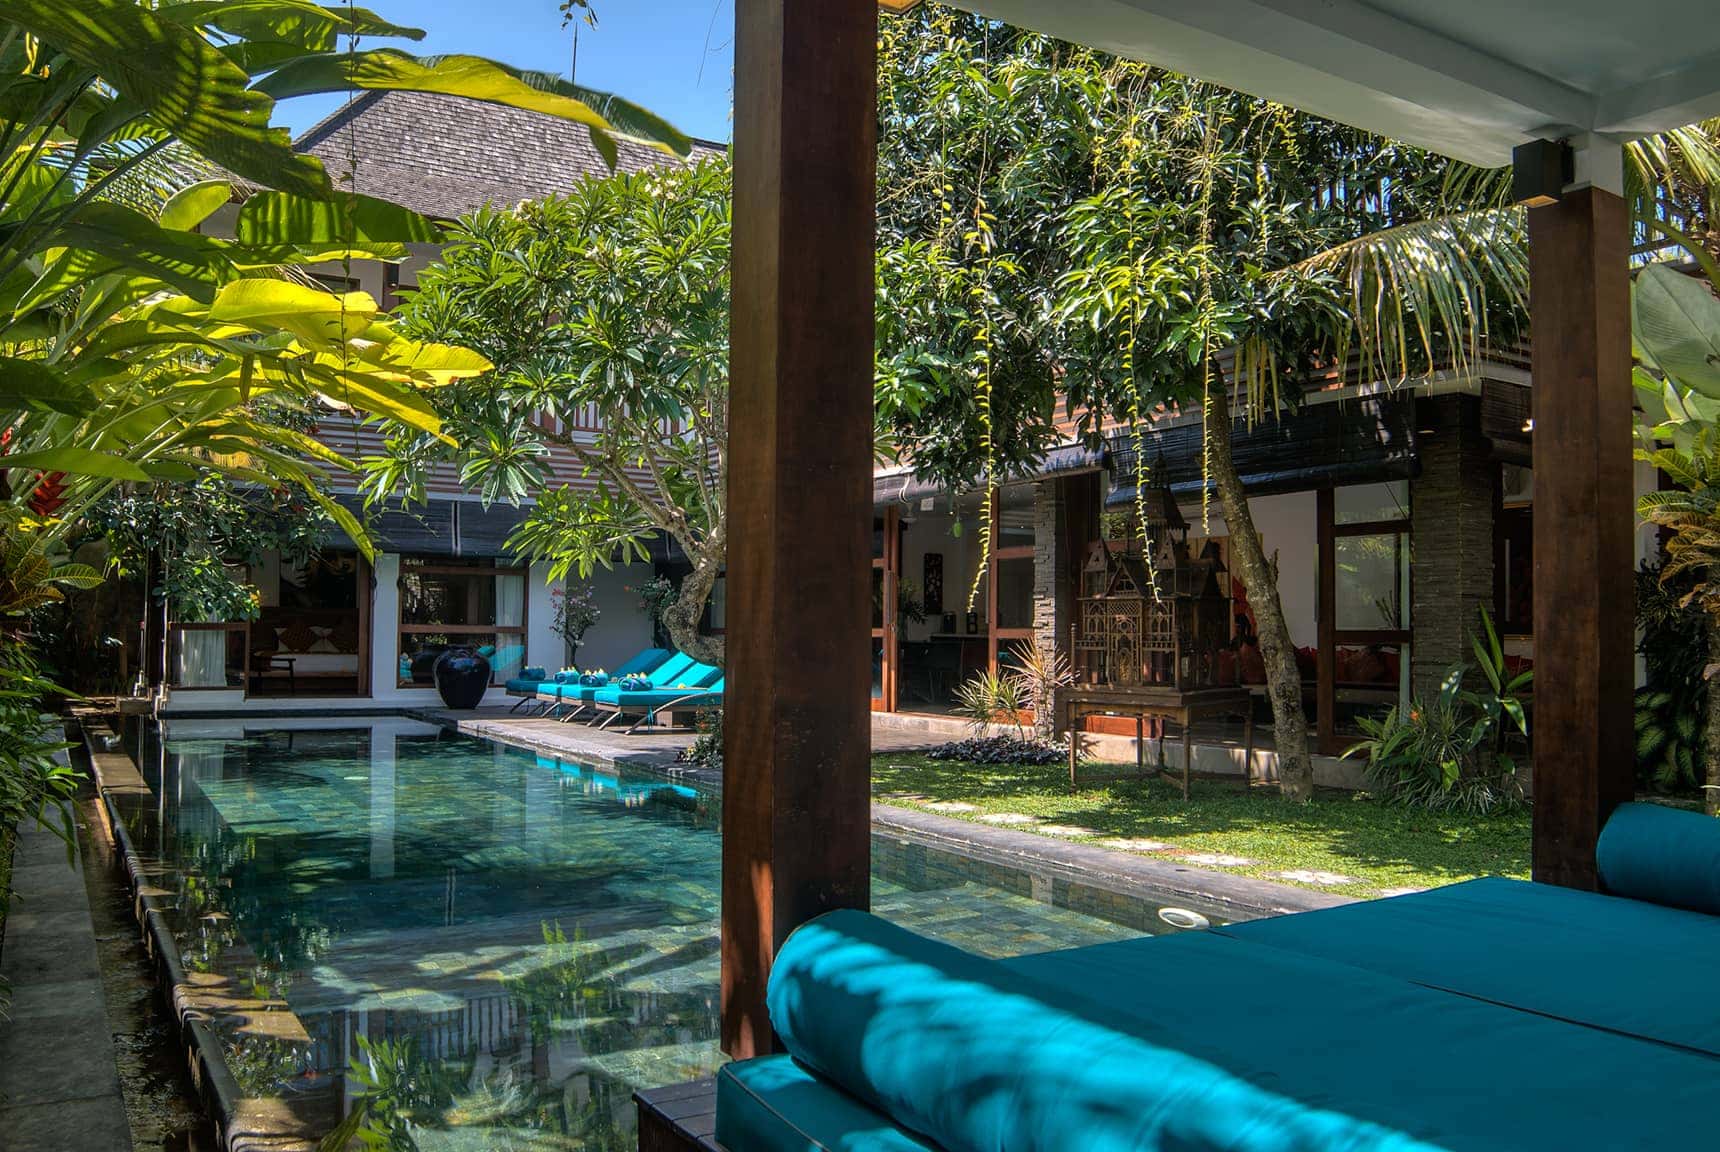 Villa Amira - Seminyak, Bali Indonesia (Bali villa photography by master photographer Rick Carmichael of LuxViz)